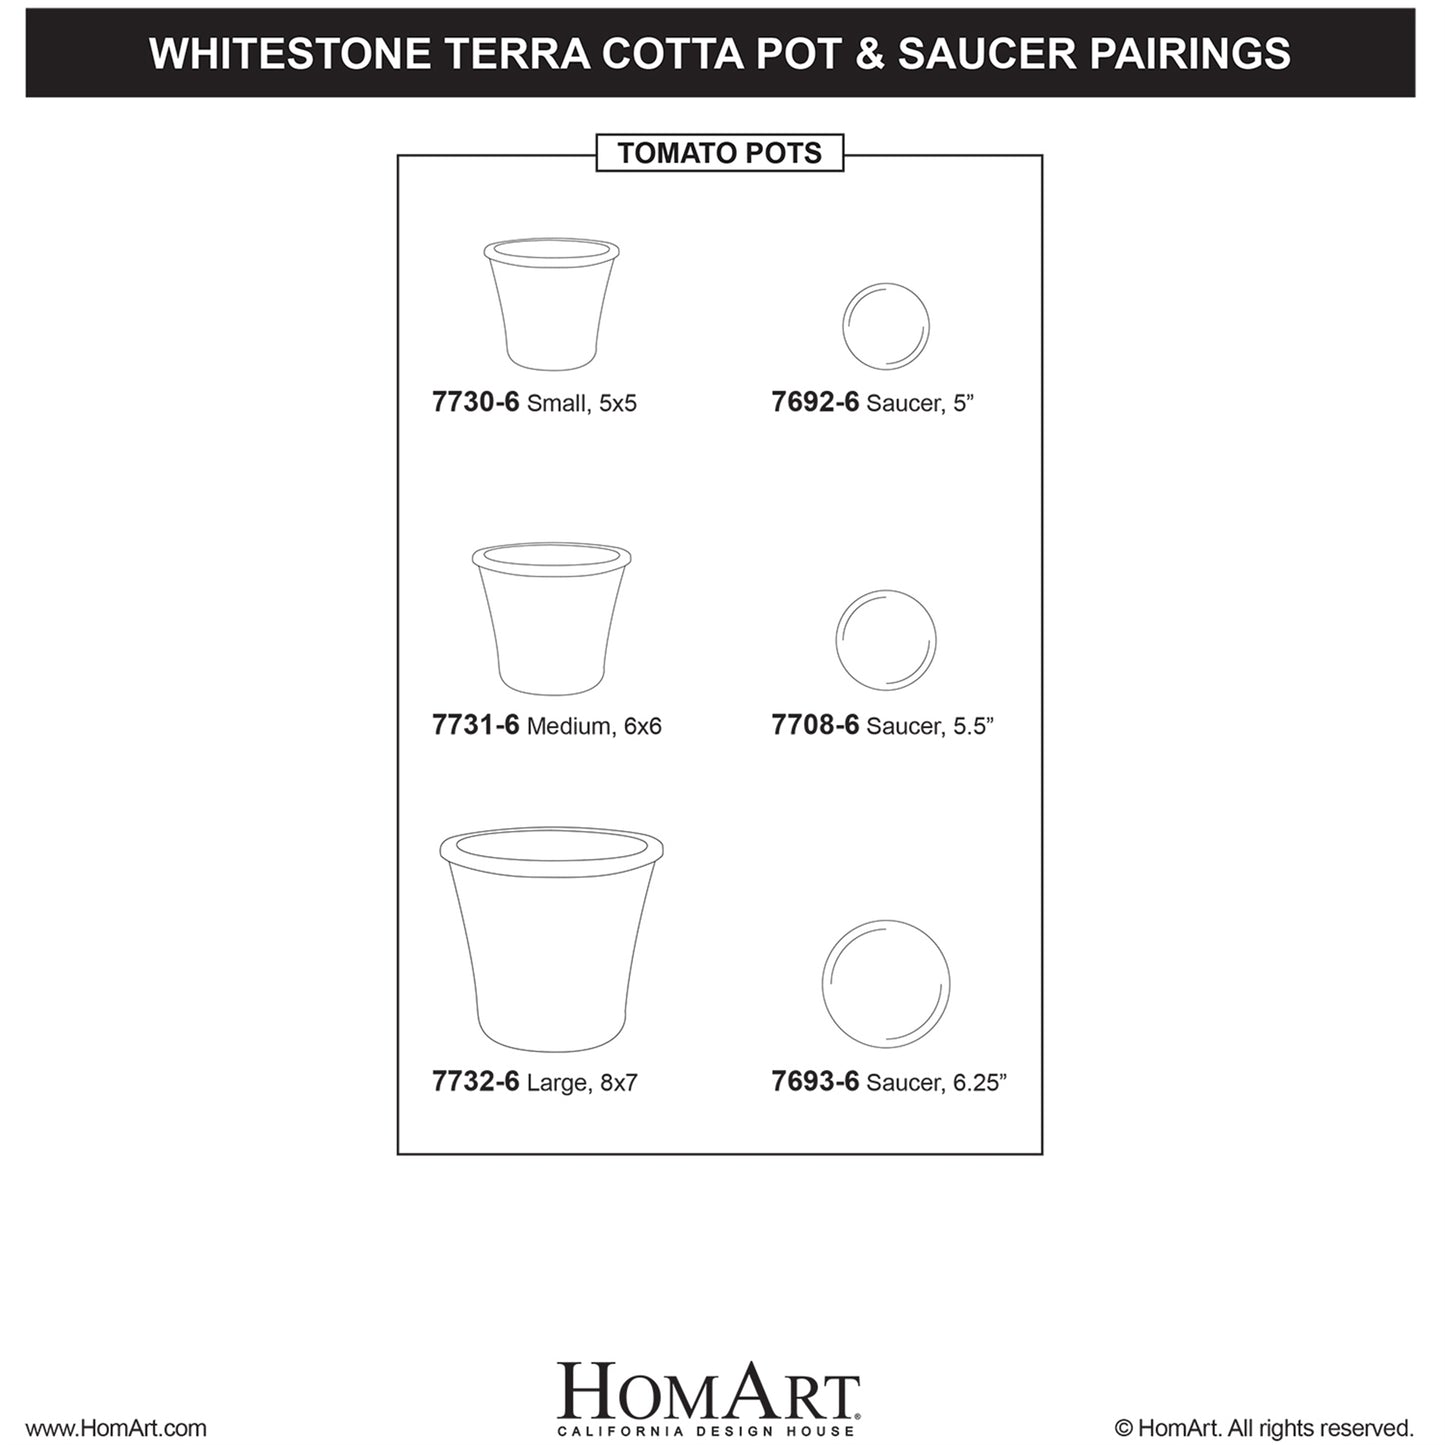 Rustic Terra Cotta Short Tomato Pot with saucer- Whitestone